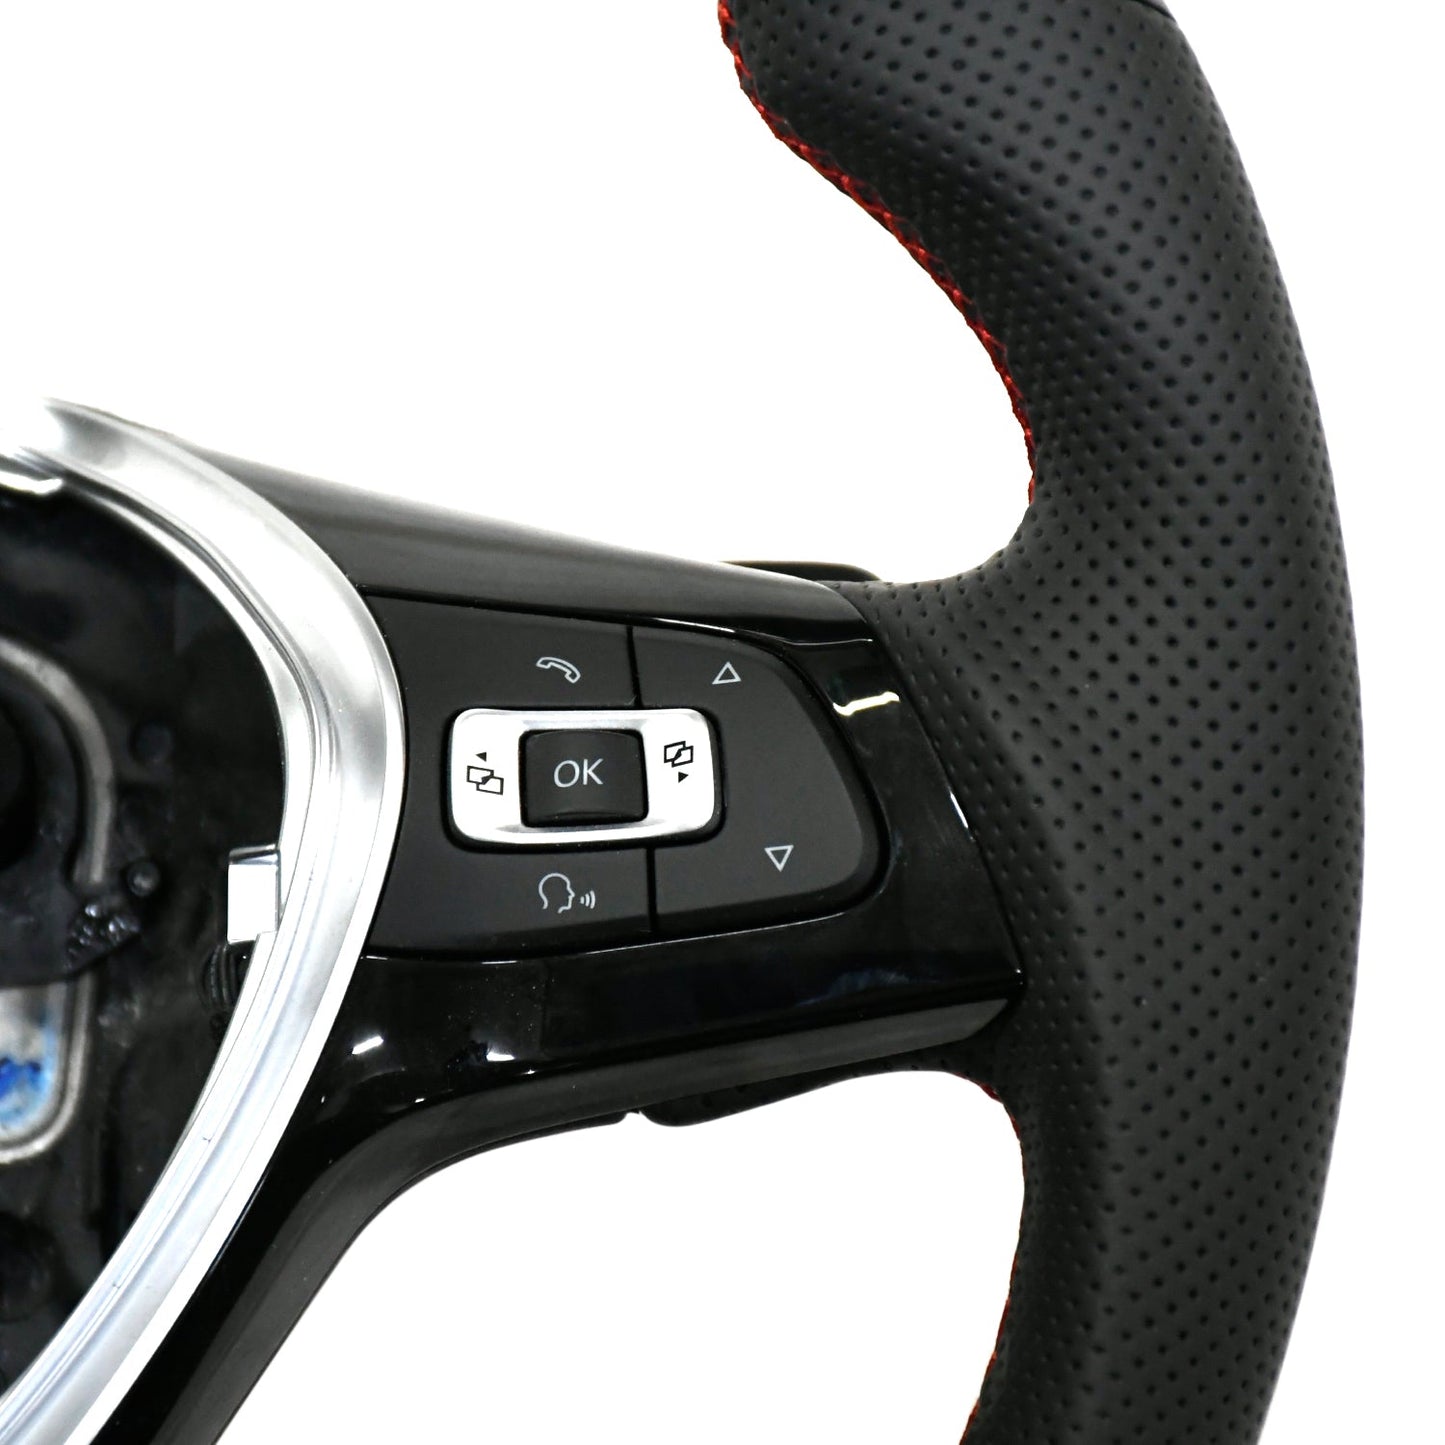 
                  
                    Steering Wheel for Polo - Carbon Fibre-STEERING WHEEL-RETRO SOLUTIONS-CARPLUS
                  
                